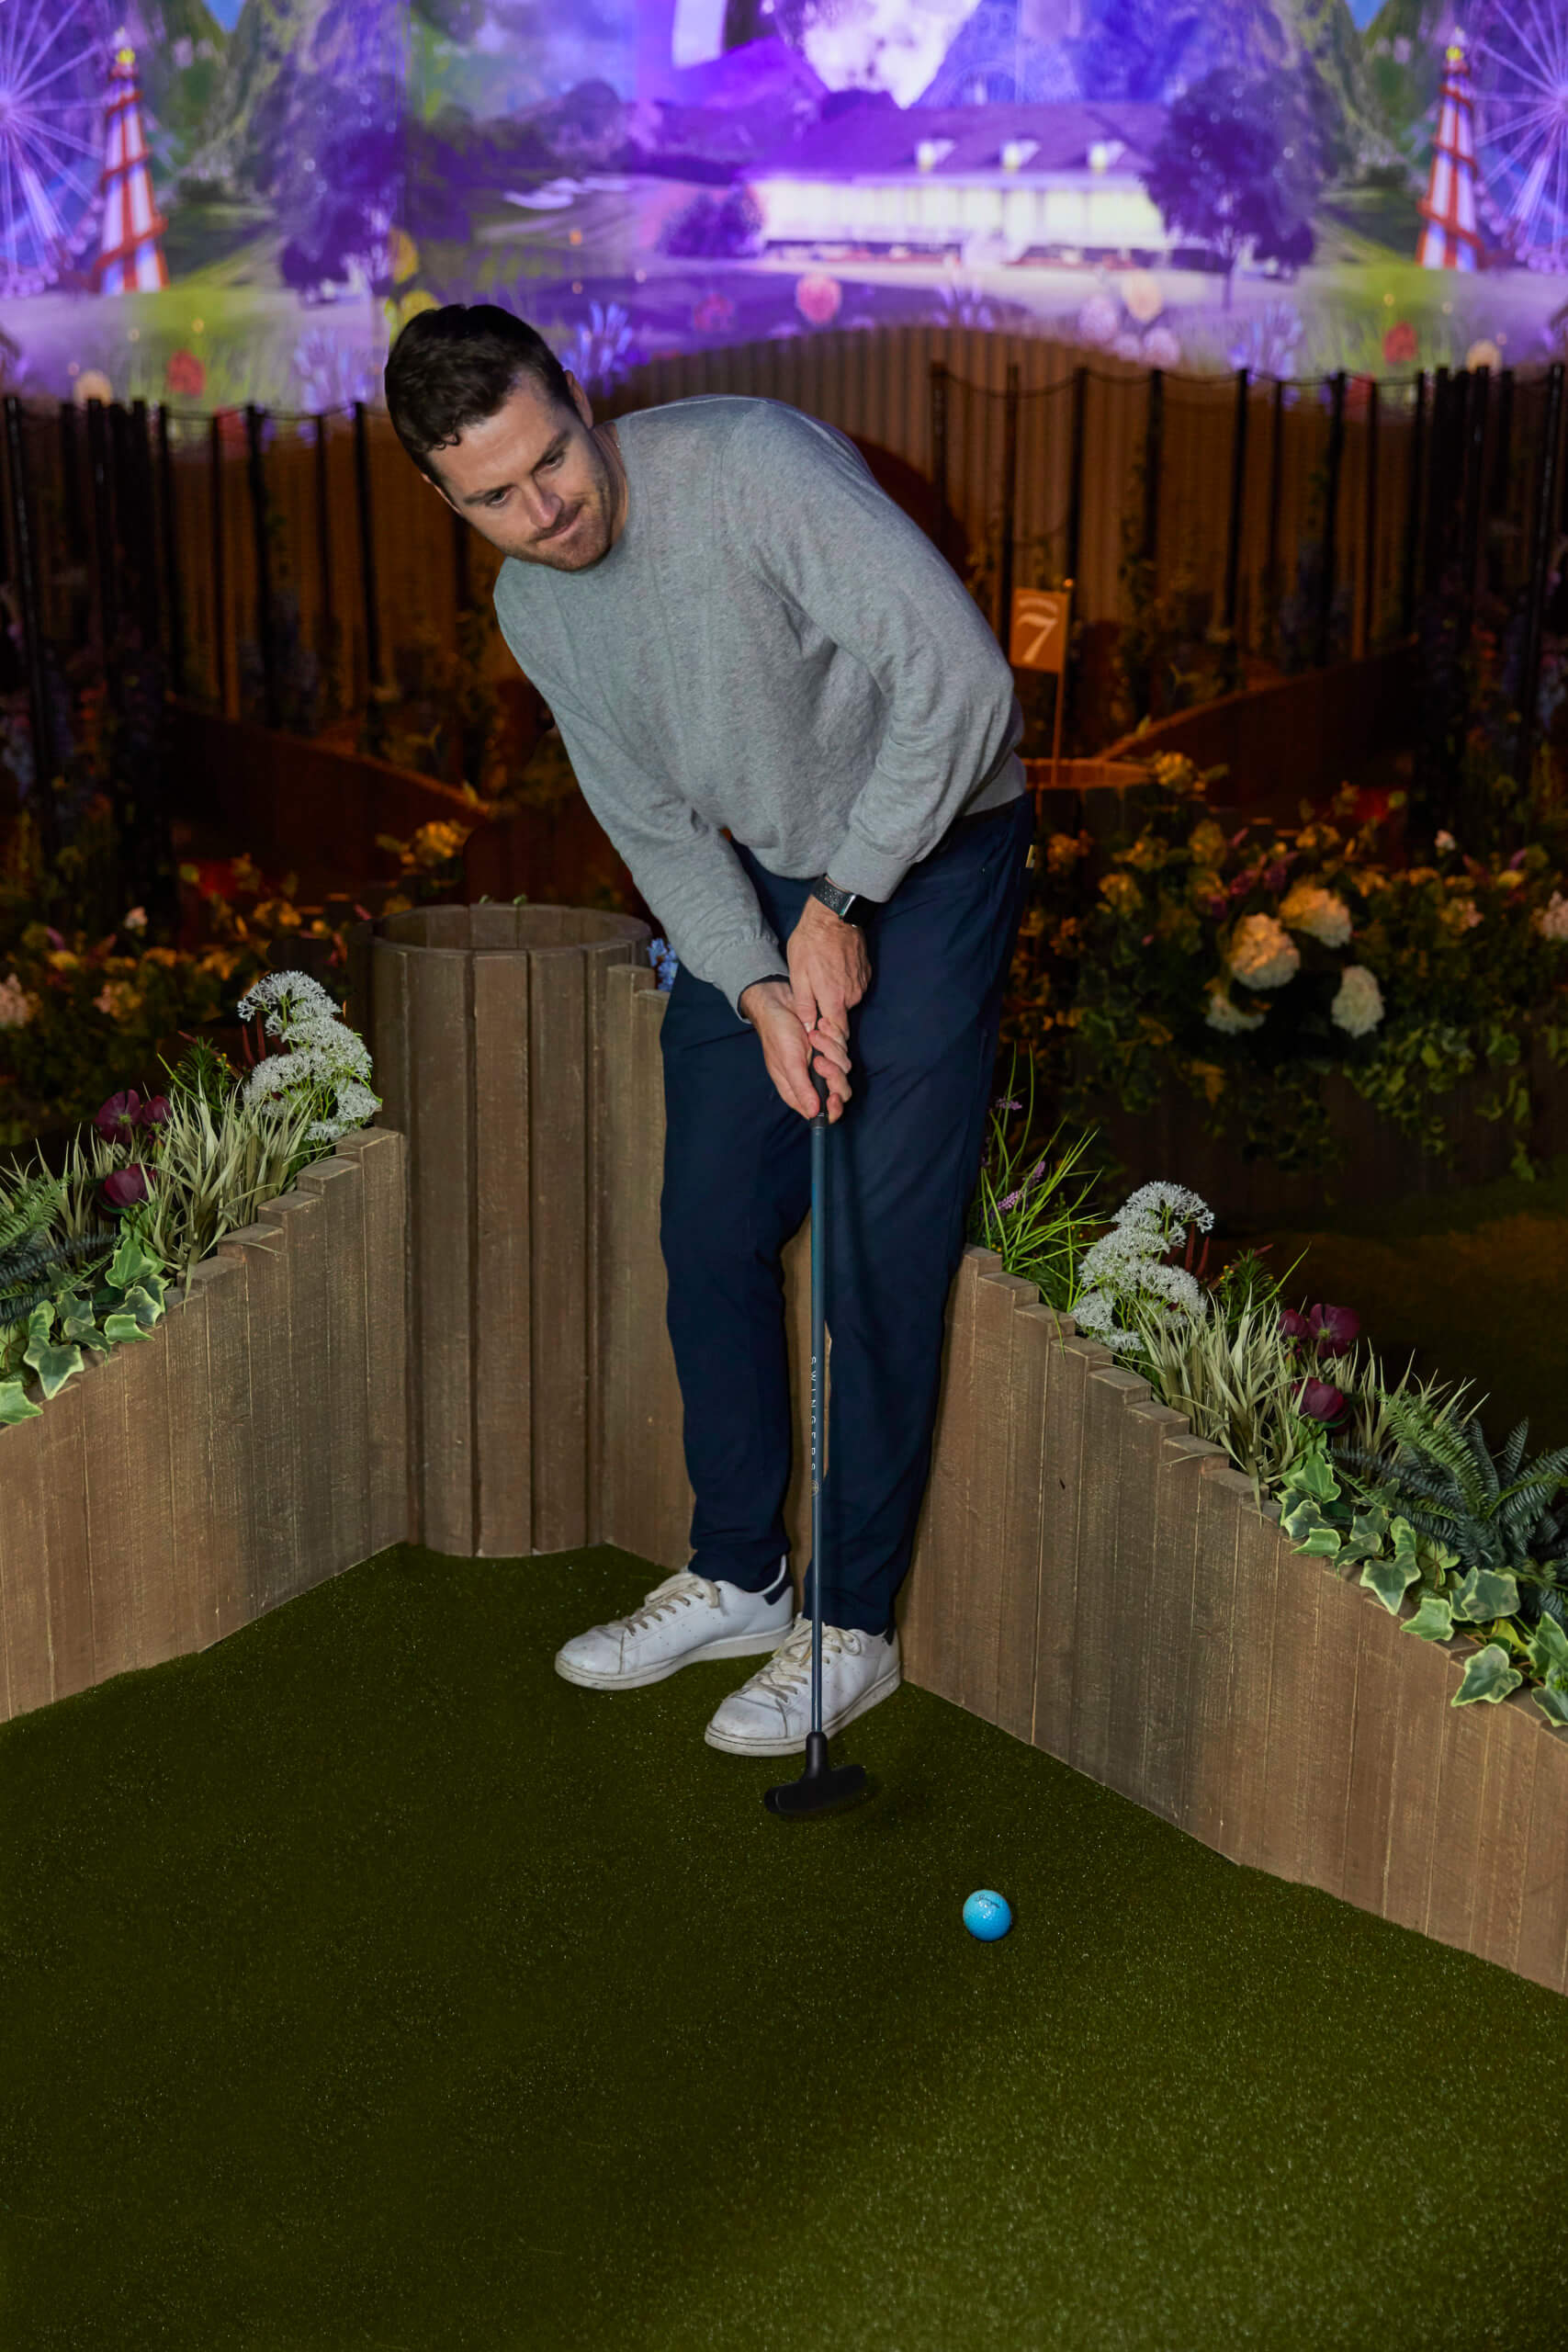 Swingers brings immersive mini golf